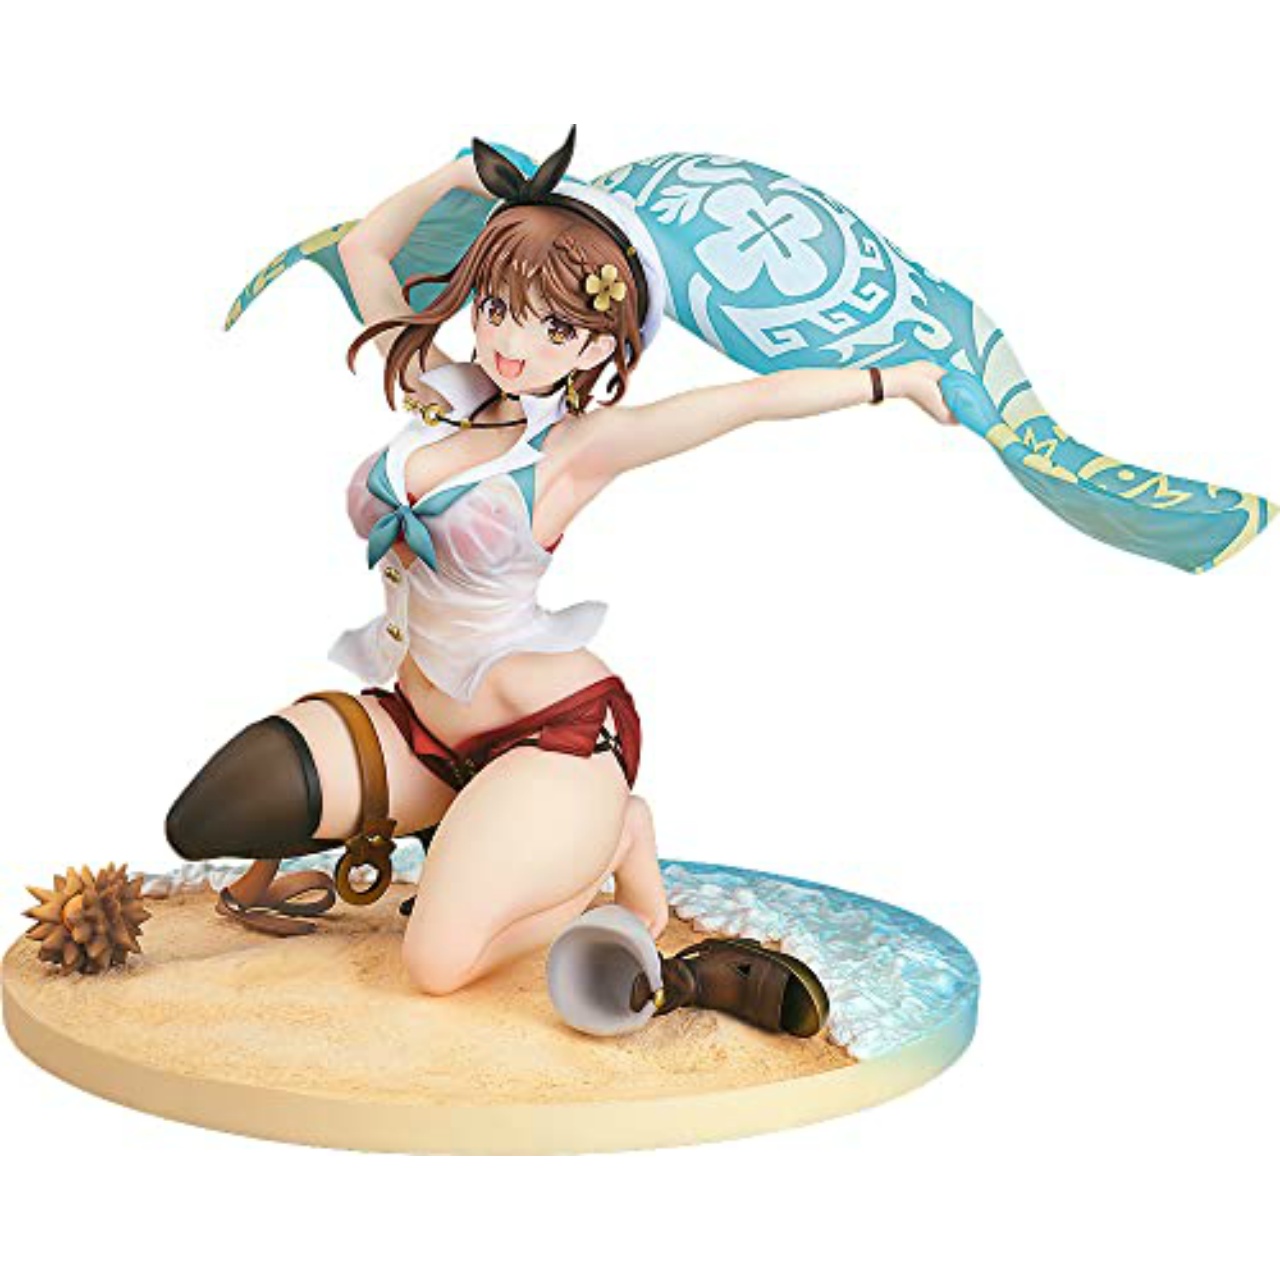 Phat! Atelier Ryza 2 ~Lost lore and secret fairy~ Ryza (Raiserin Staudt) 1/6 scale figure